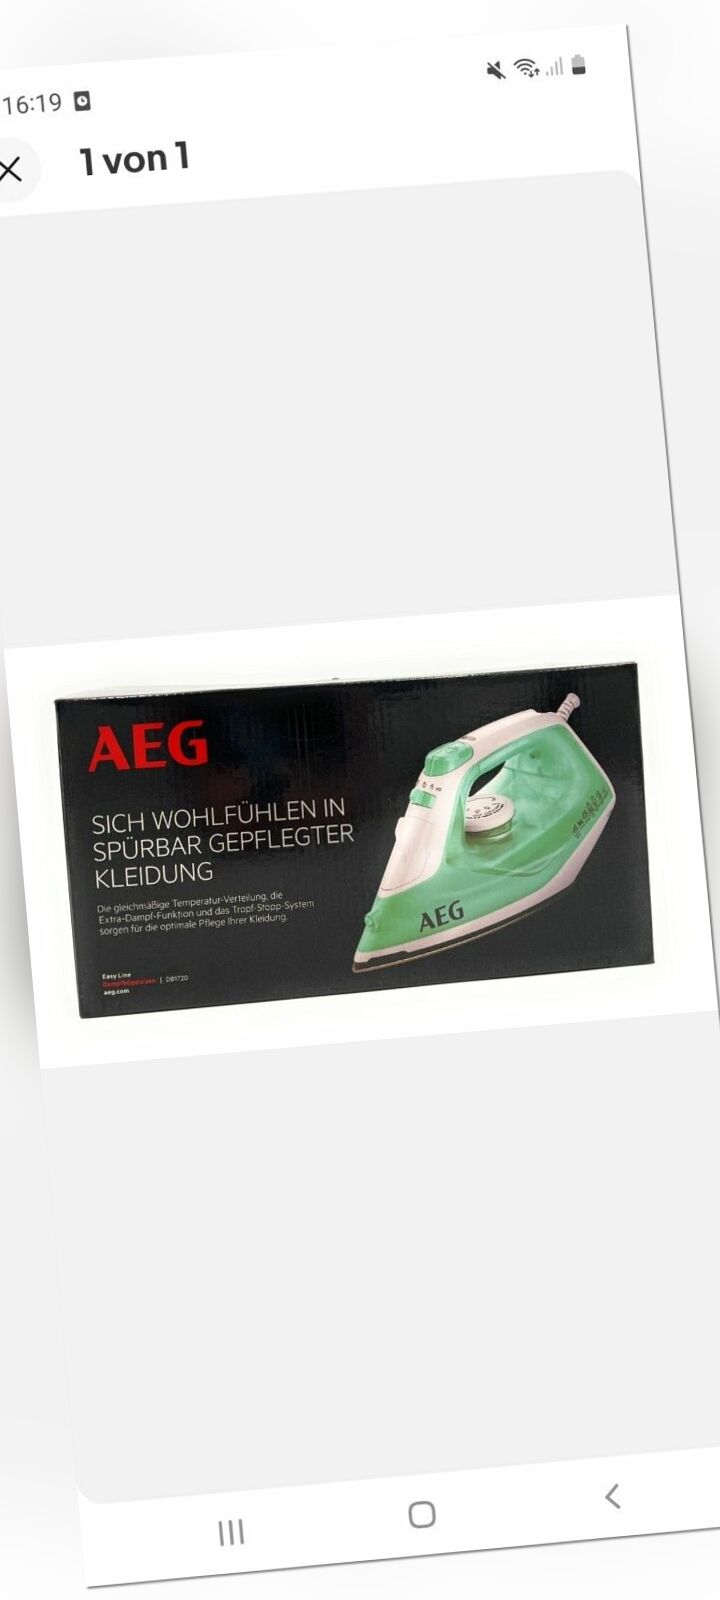 AEG DB1720 Easyline 2200W Bügeleisen - Aqua Mint